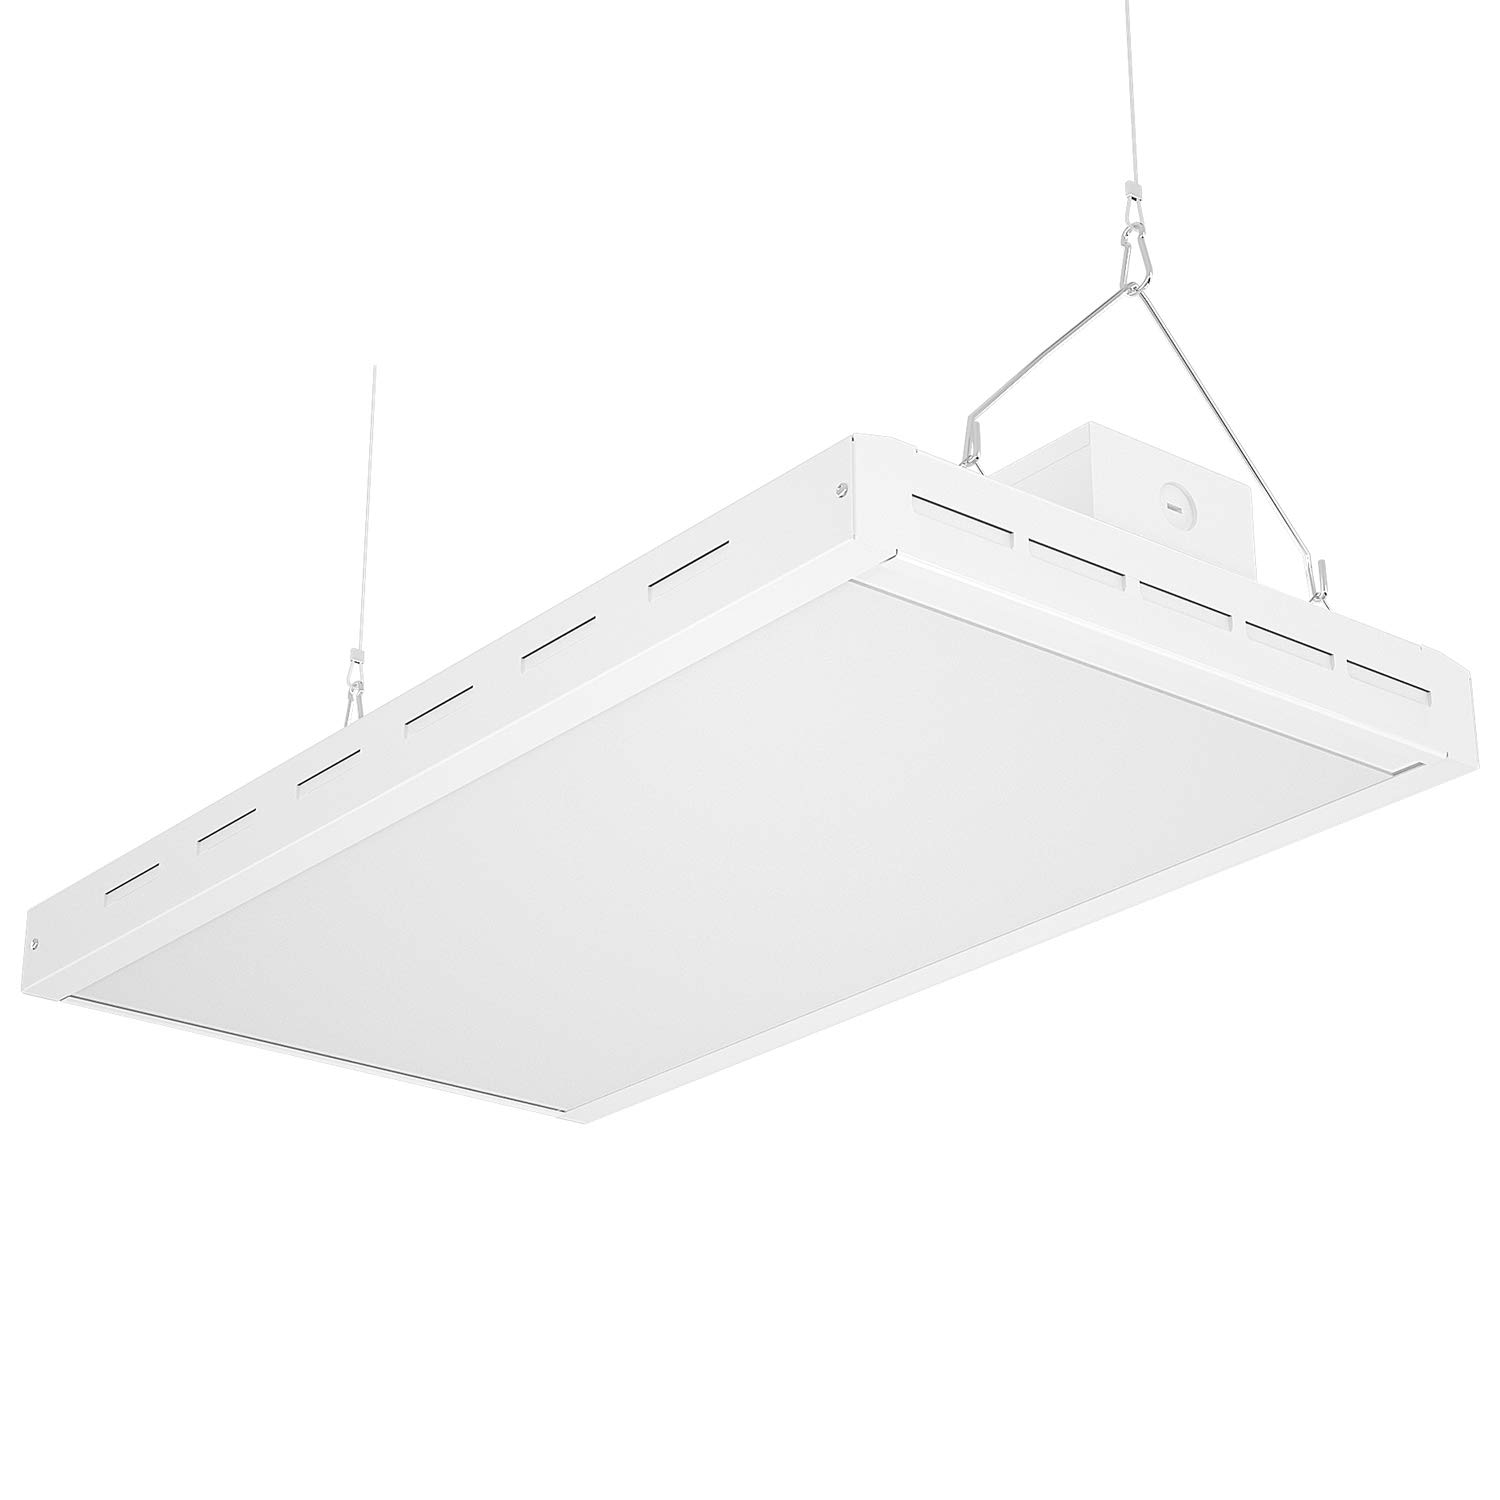 Details about   AntLux LED Linear High Bay Light Industrial Warehouse Garage Shop Lighting Lamp 